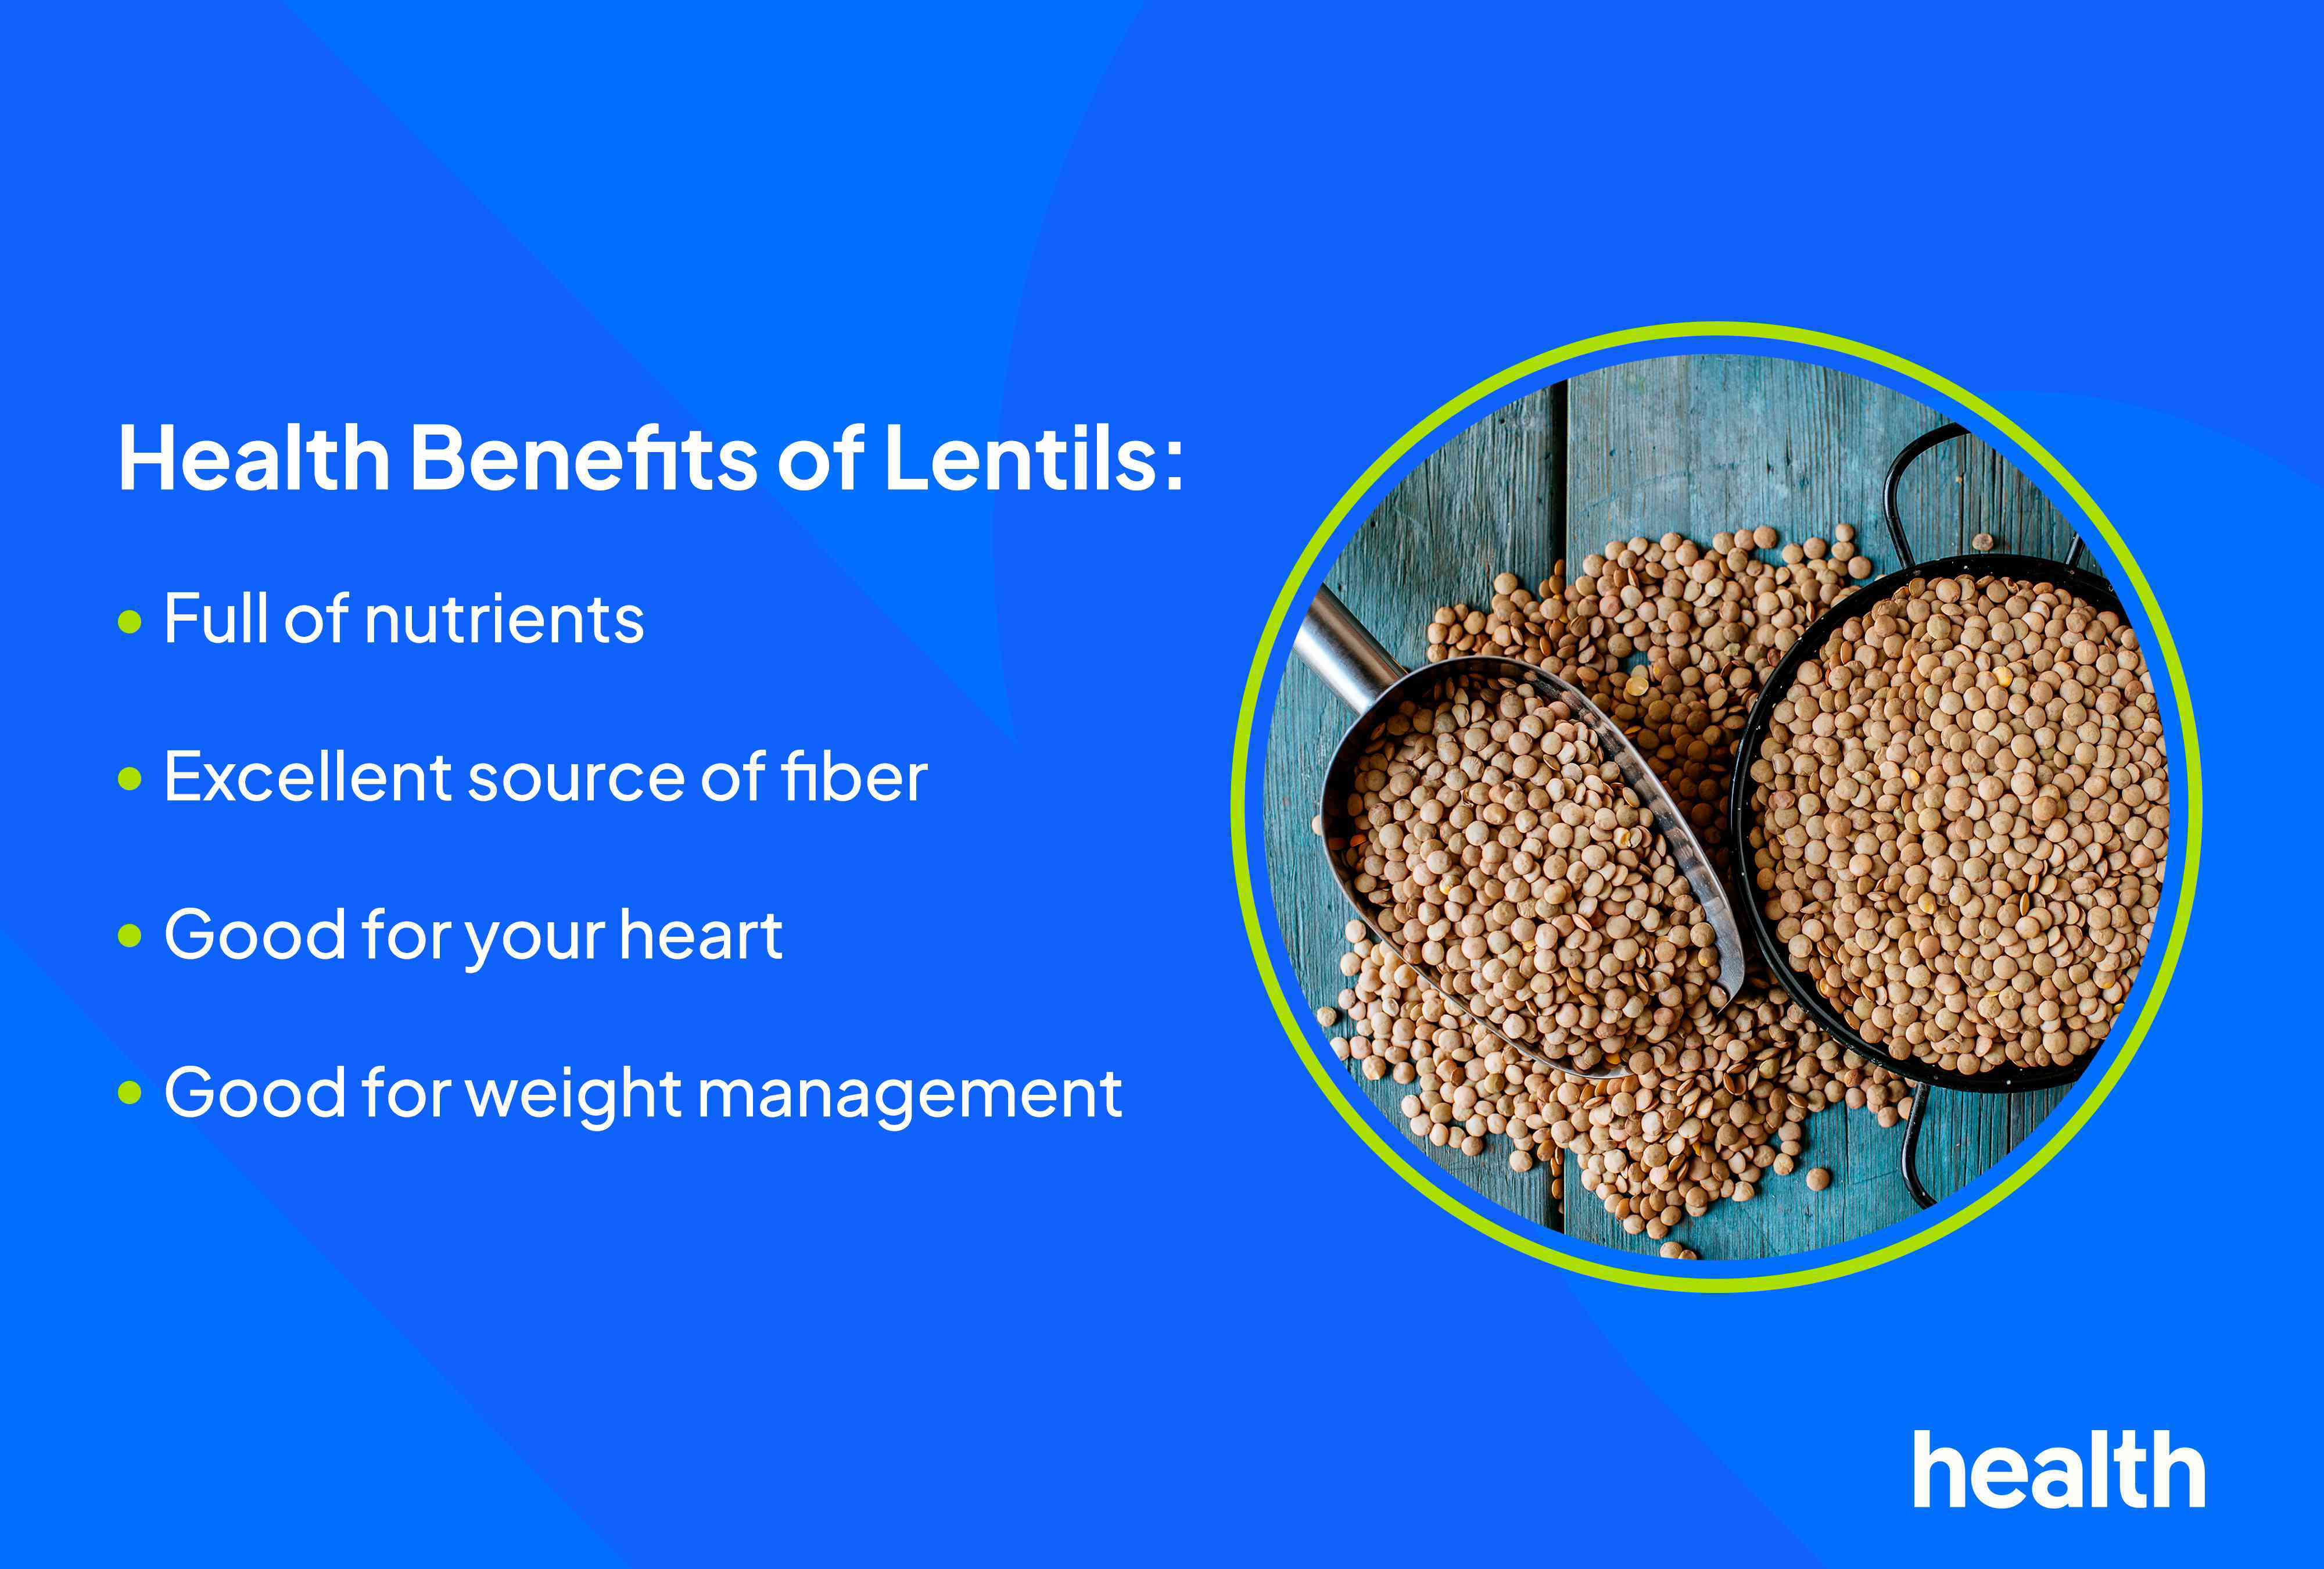 Health Benefits of Lentils